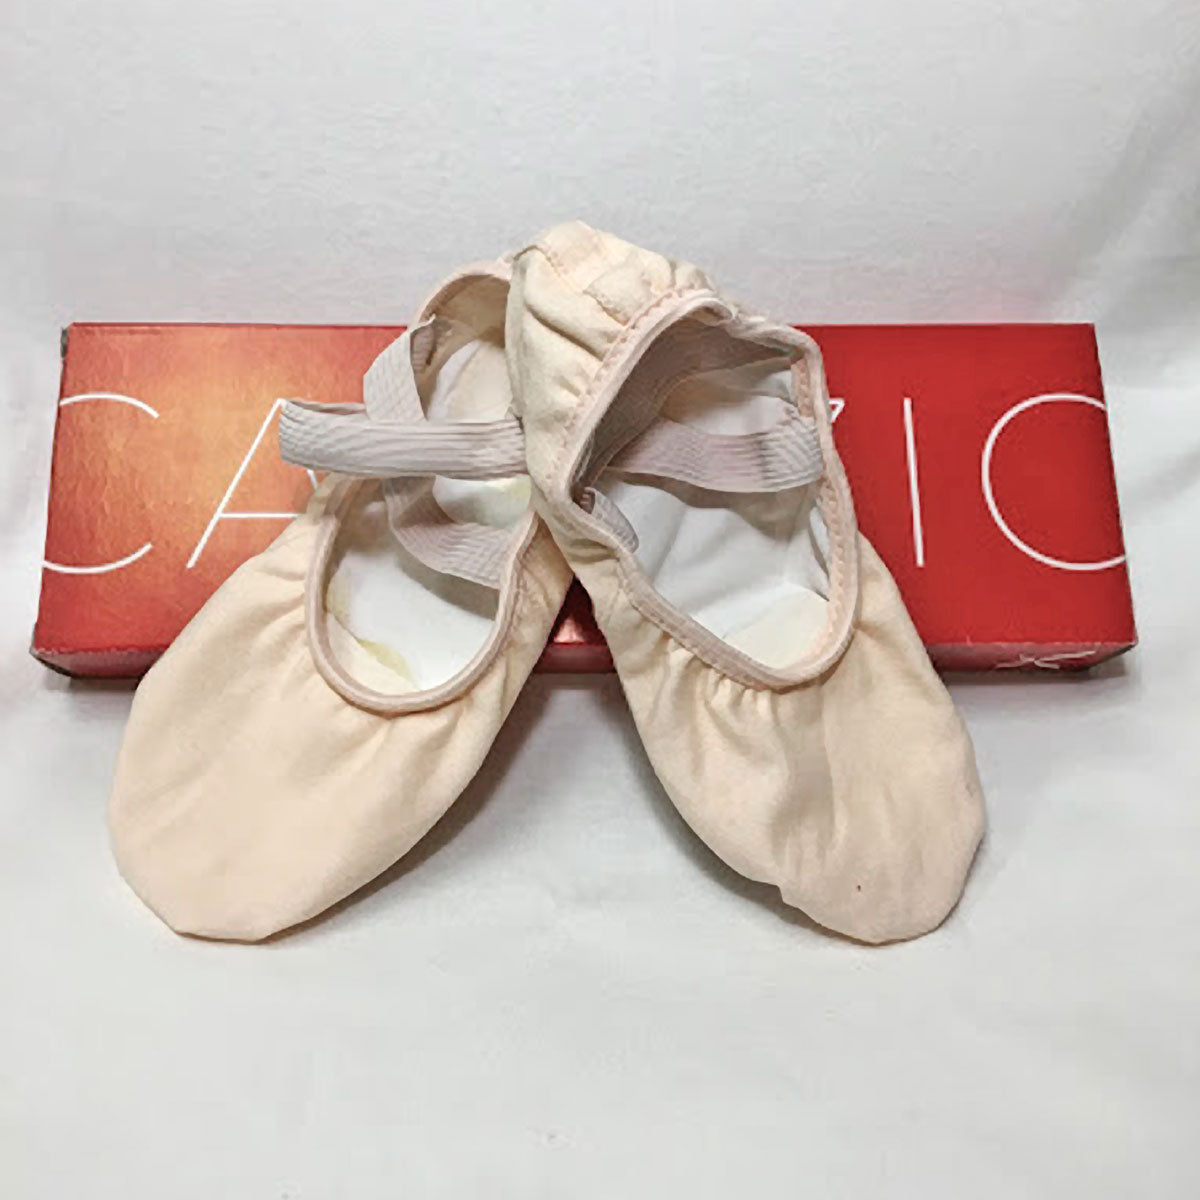 Hanami Ballet Shoes